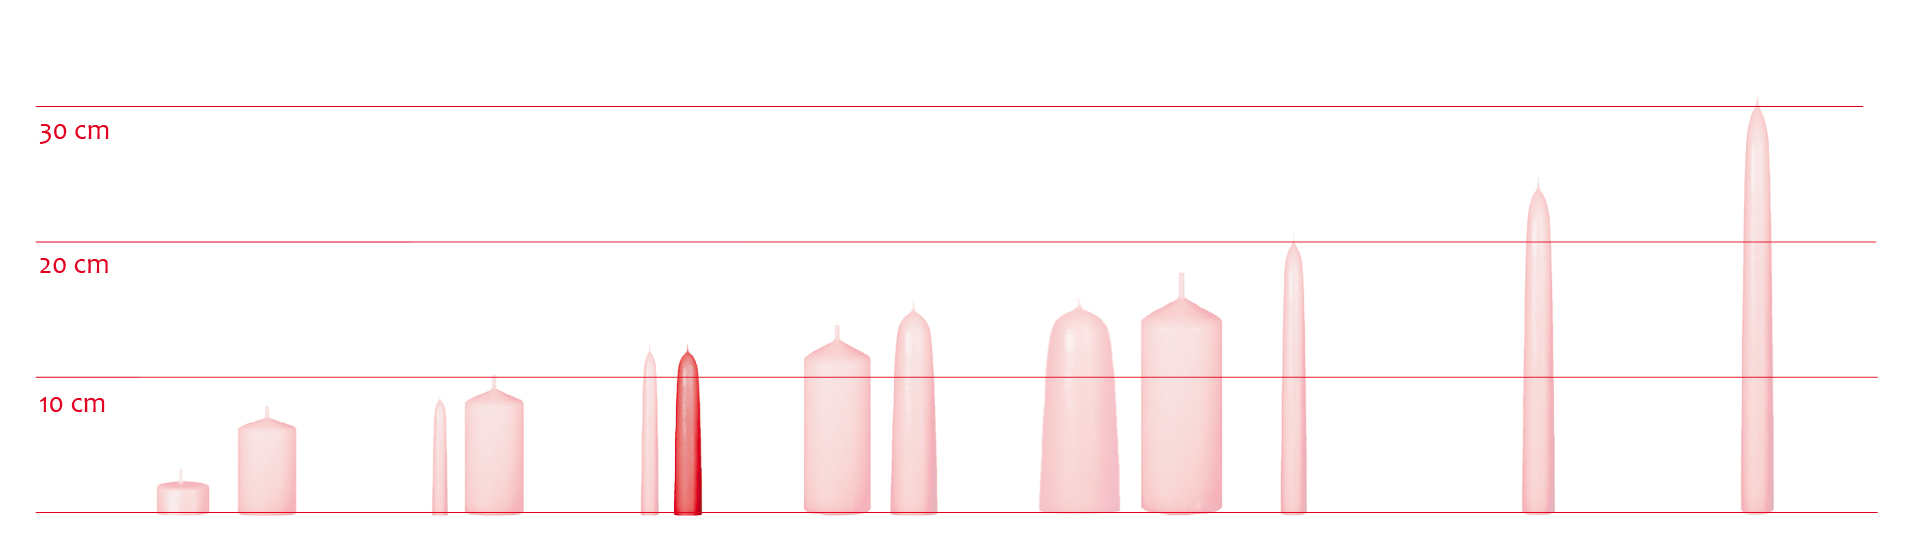 konische Kerzen-120mm lang-rot-Grafik